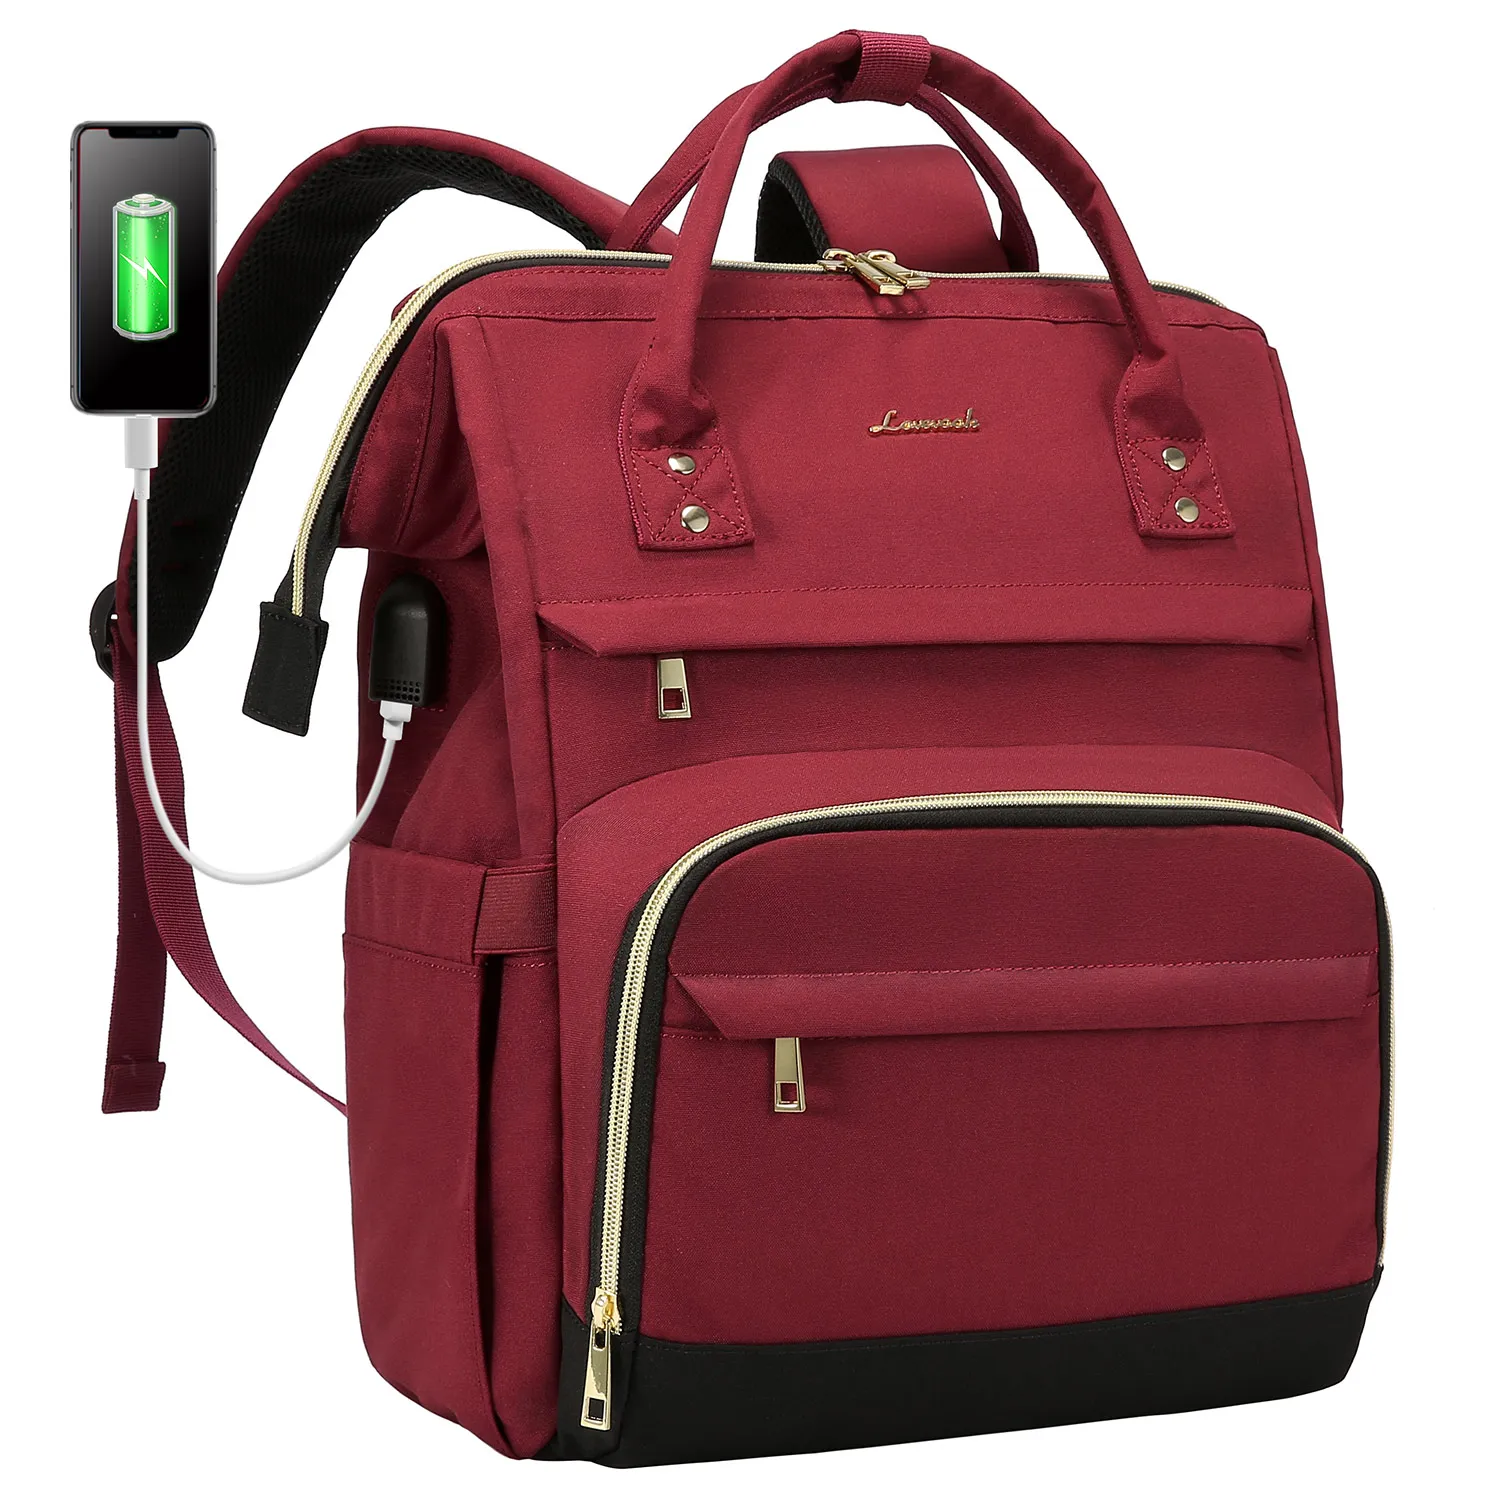 

Lovevook 2022 15.6 17 inch large school back pack nylon lightweight university cute bag travel backpack women's laptop backpacks